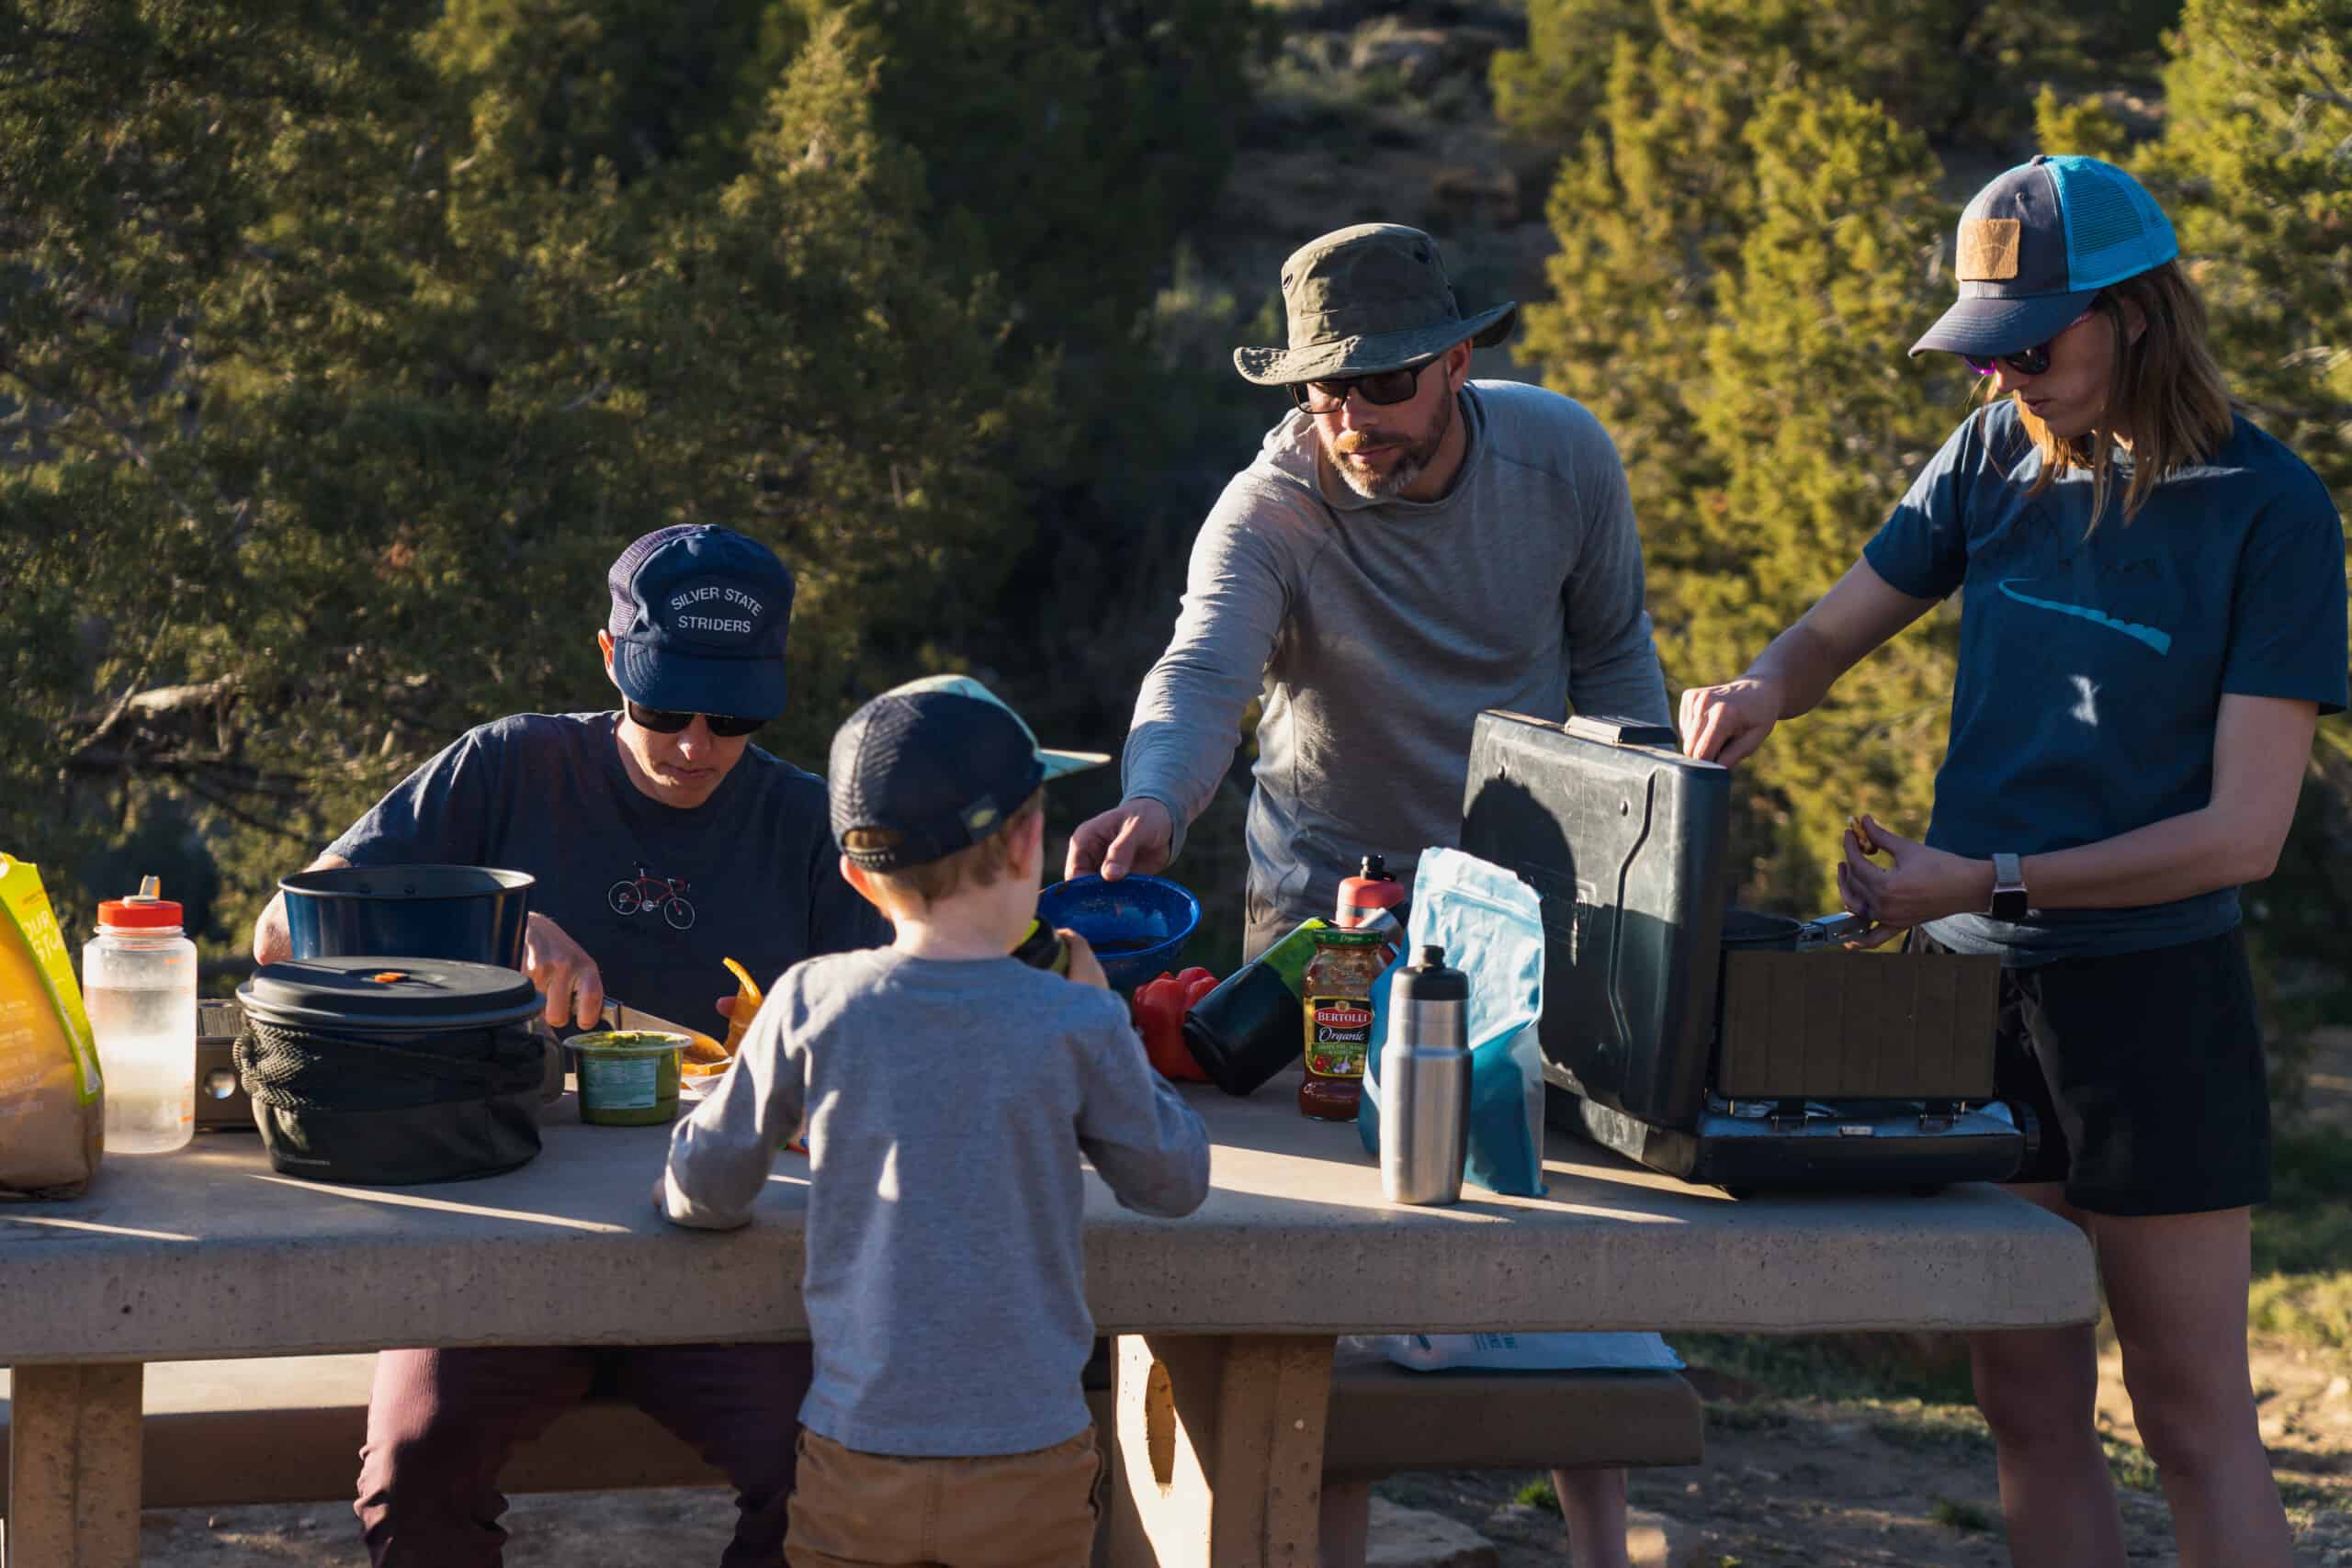 family picnic at campsite